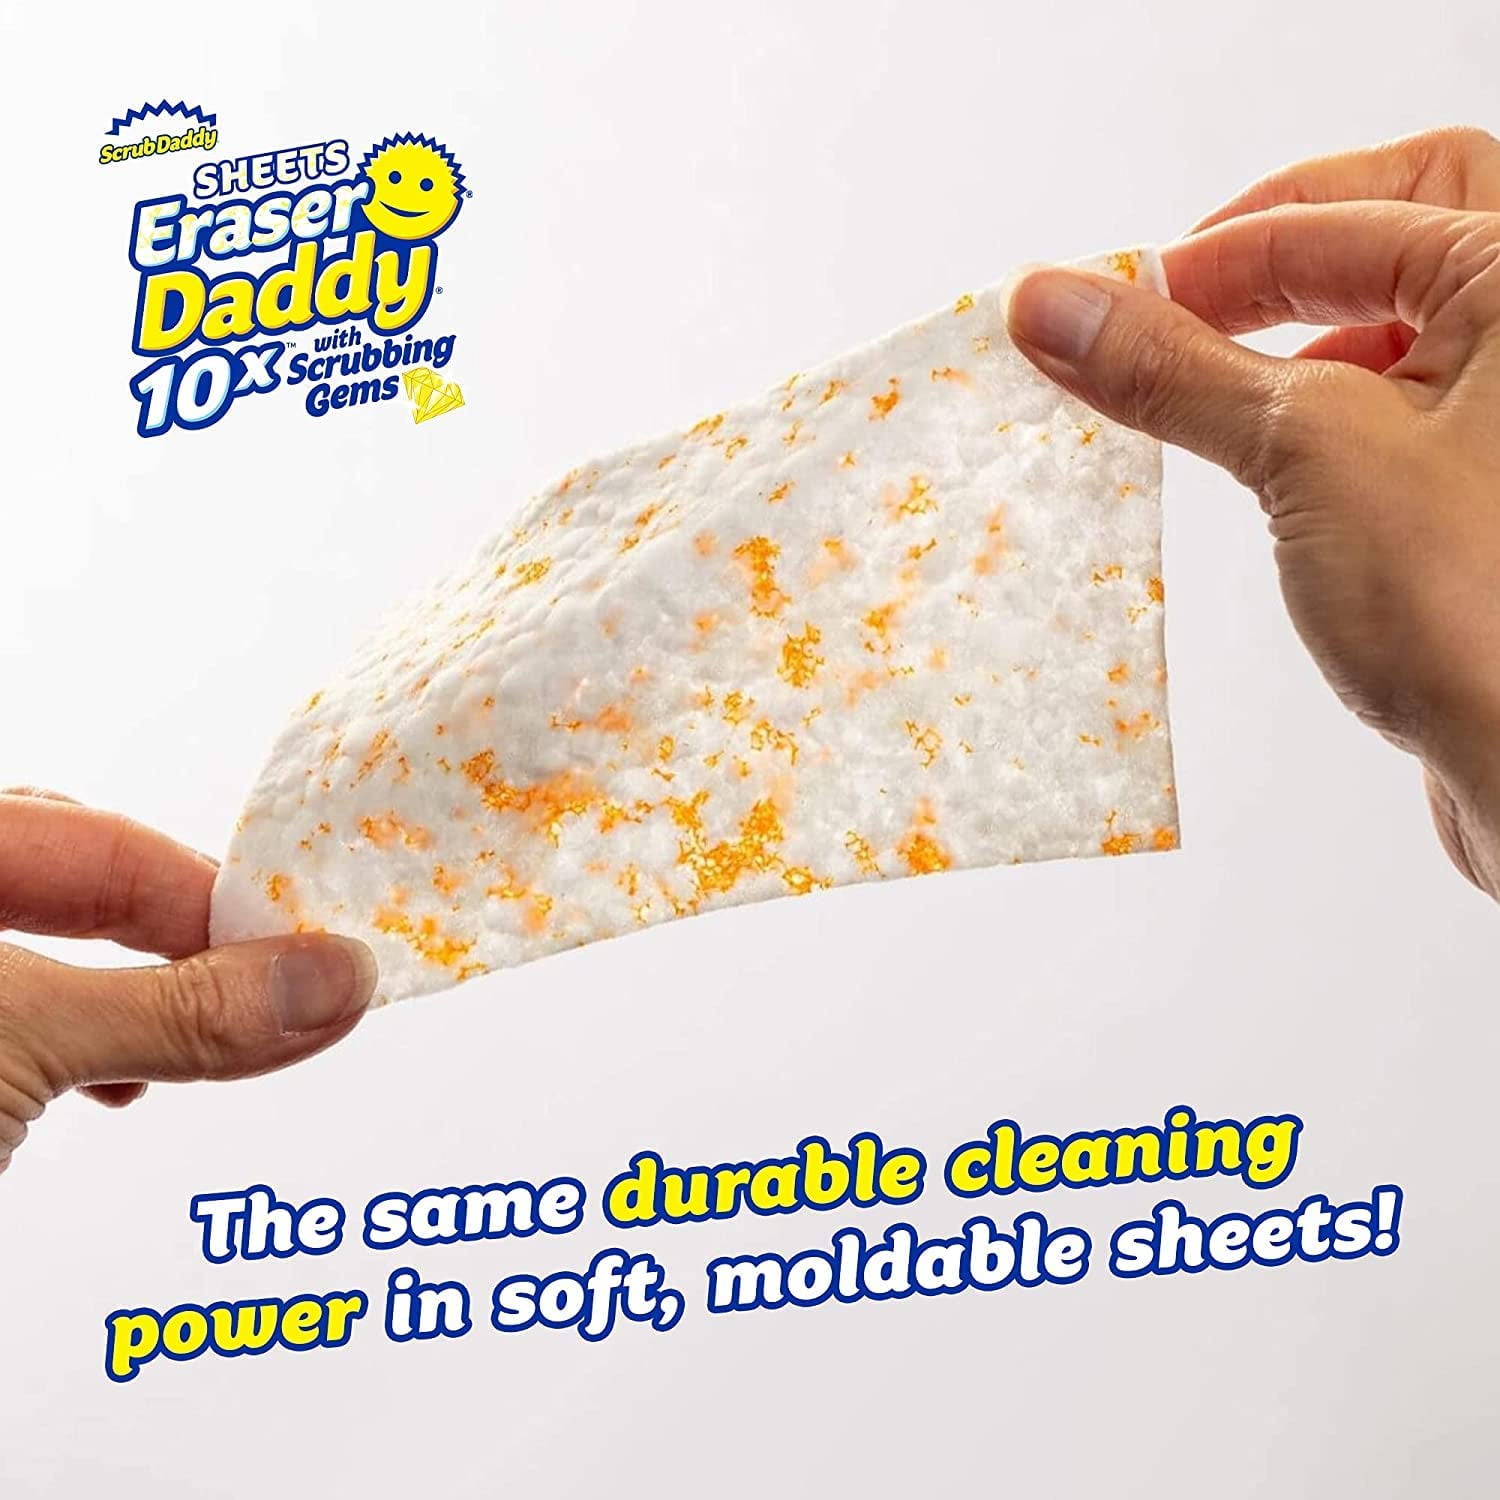 Scrub Daddy - Eraser Daddy – 2 Pack